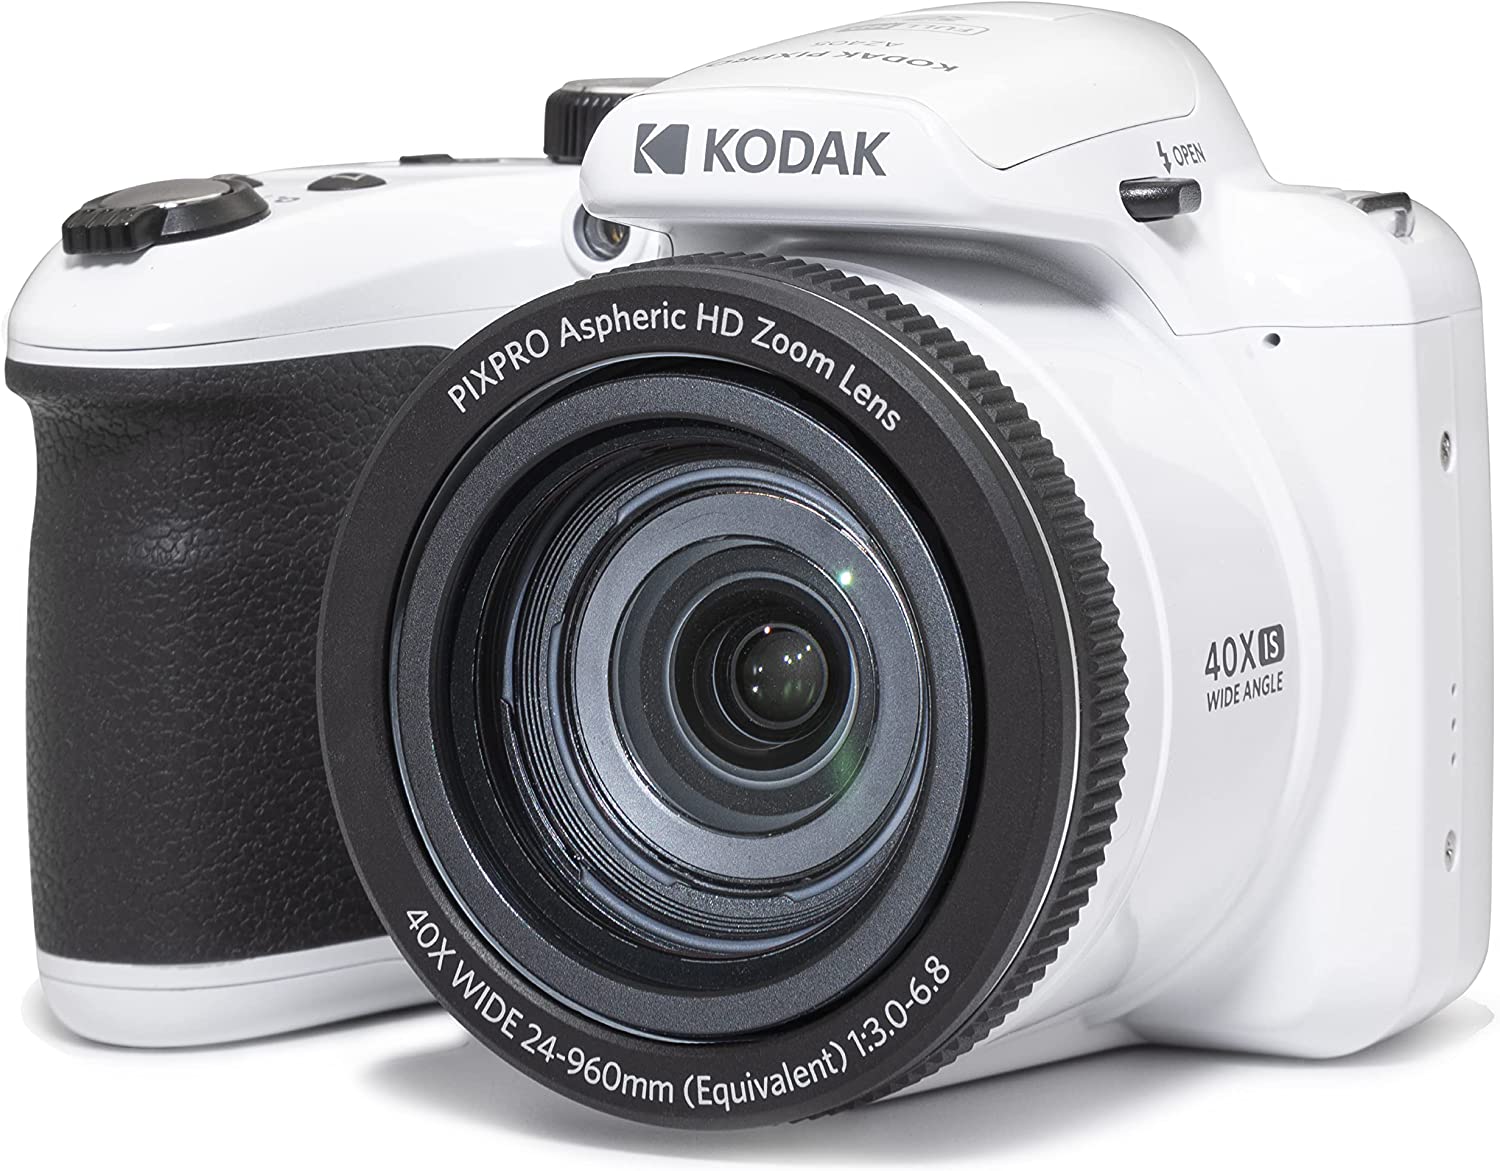 Product Image of Kodak Pixpro AZ405 Digital Bridge Camera (white)